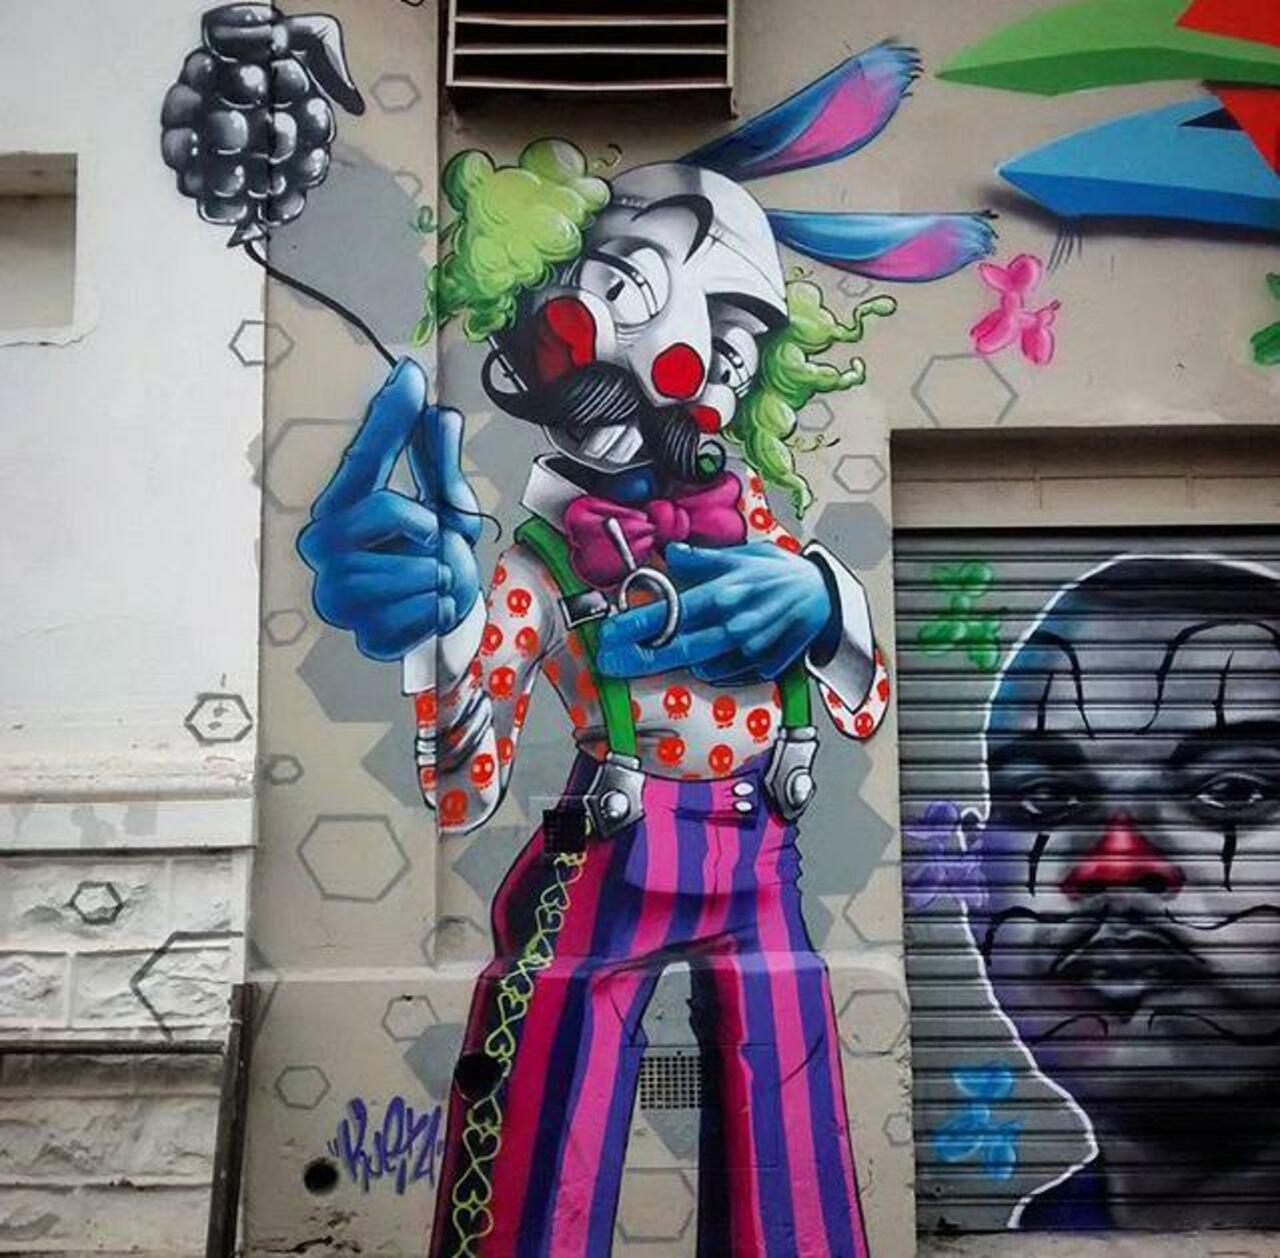 New Street Art by Karen Kueia 

#art #graffiti #mural #streetart http://t.co/RU6c9mWH4i